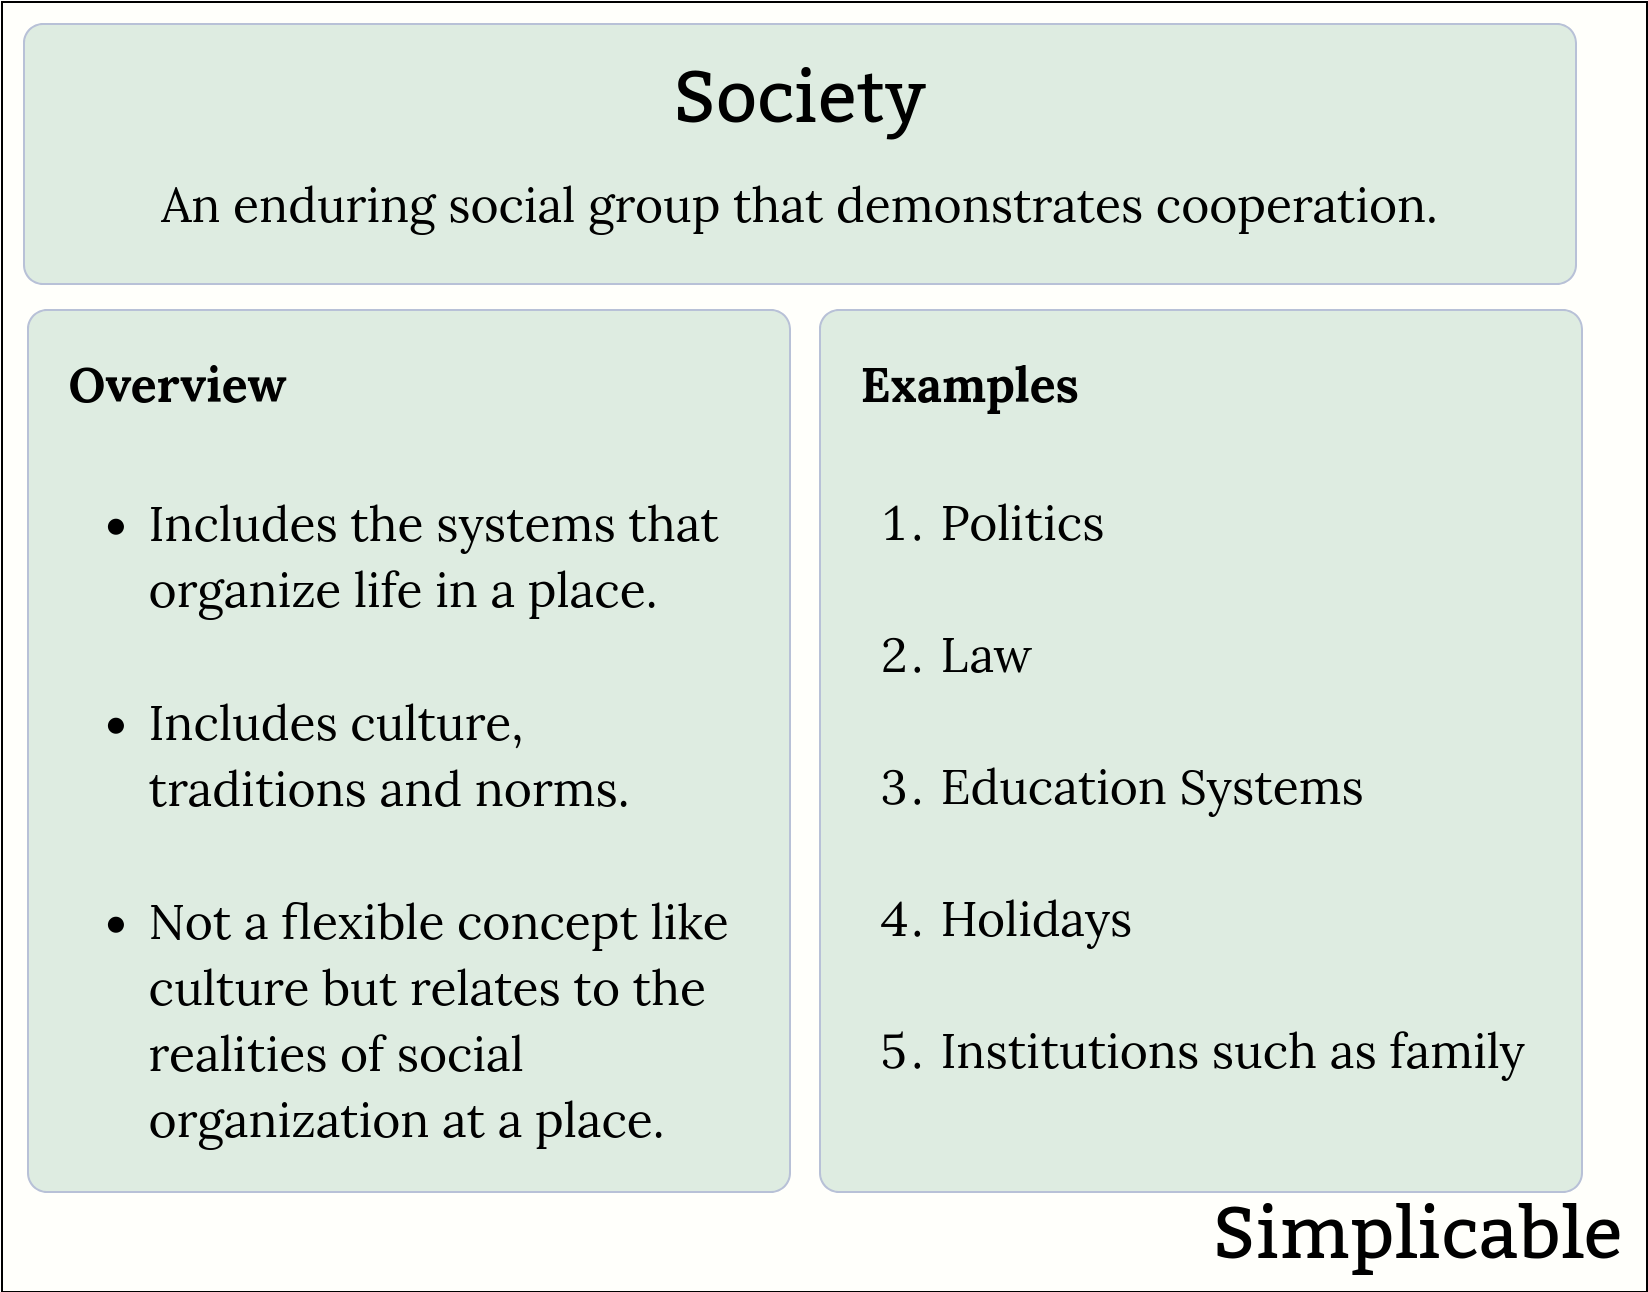 society summary simplicable